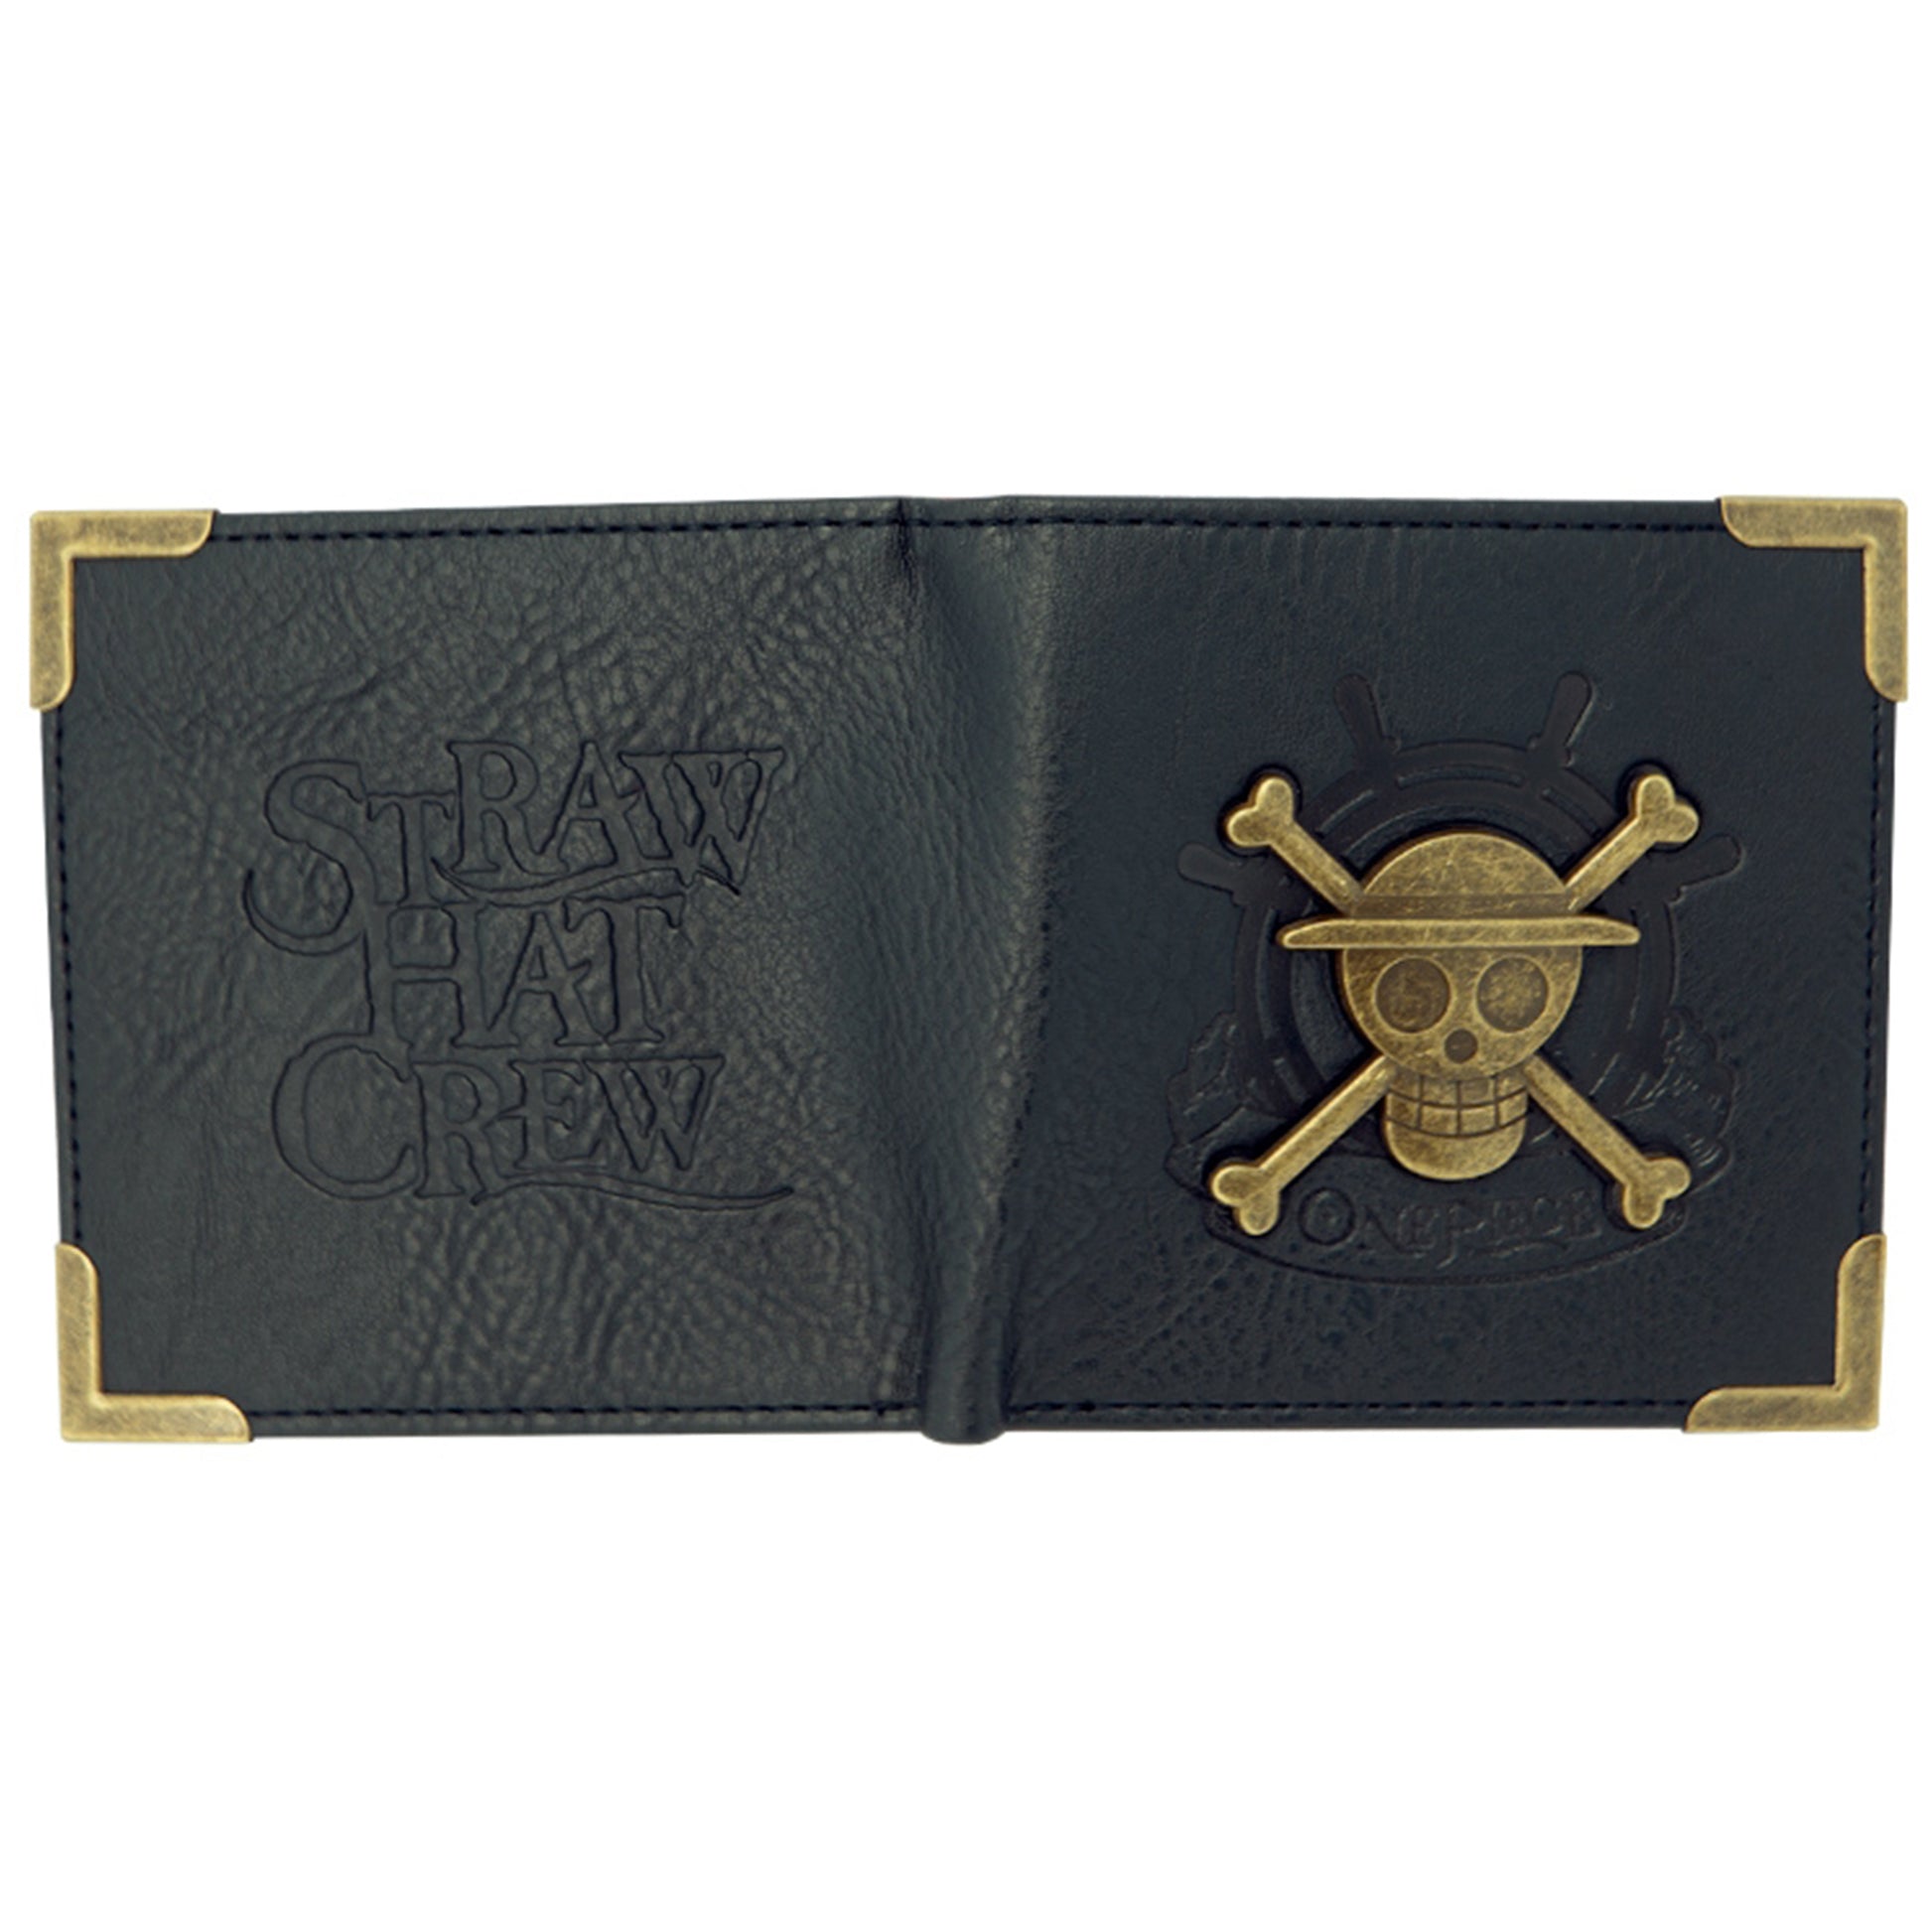 Premium One Piece Skull and Crossbones Bifold Wallet Exterior Design | Happy Piranha